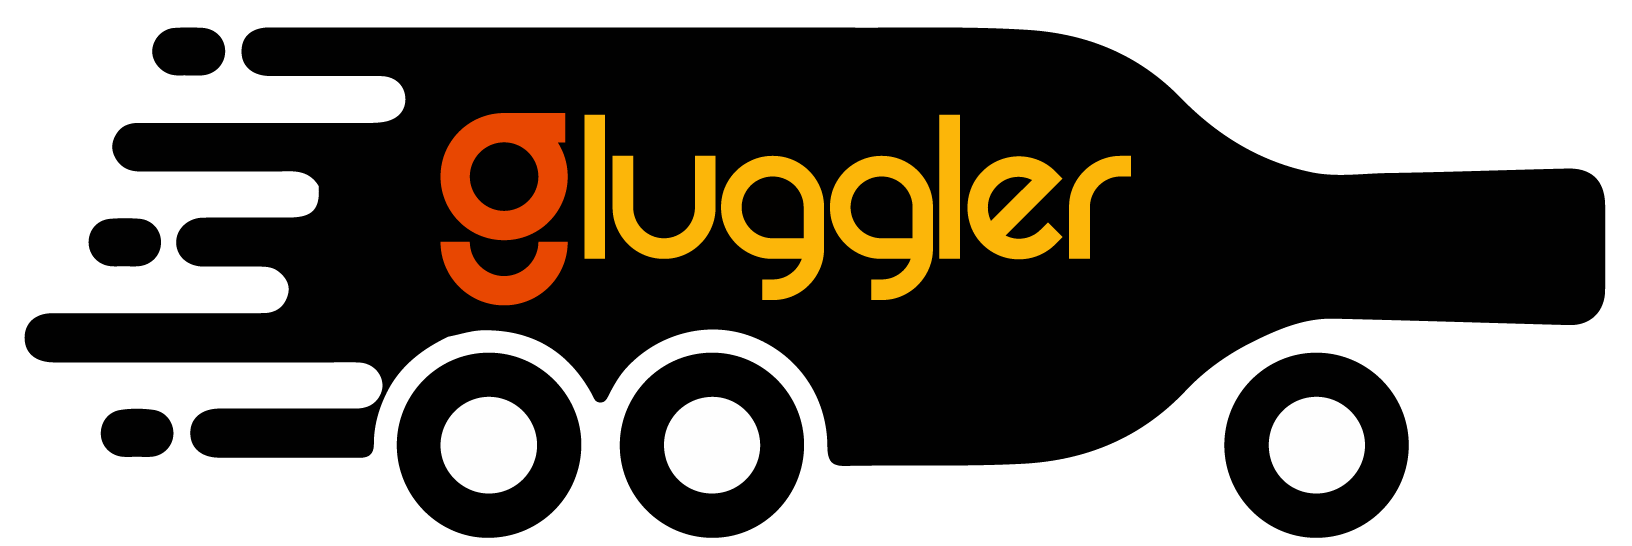 Gluggler